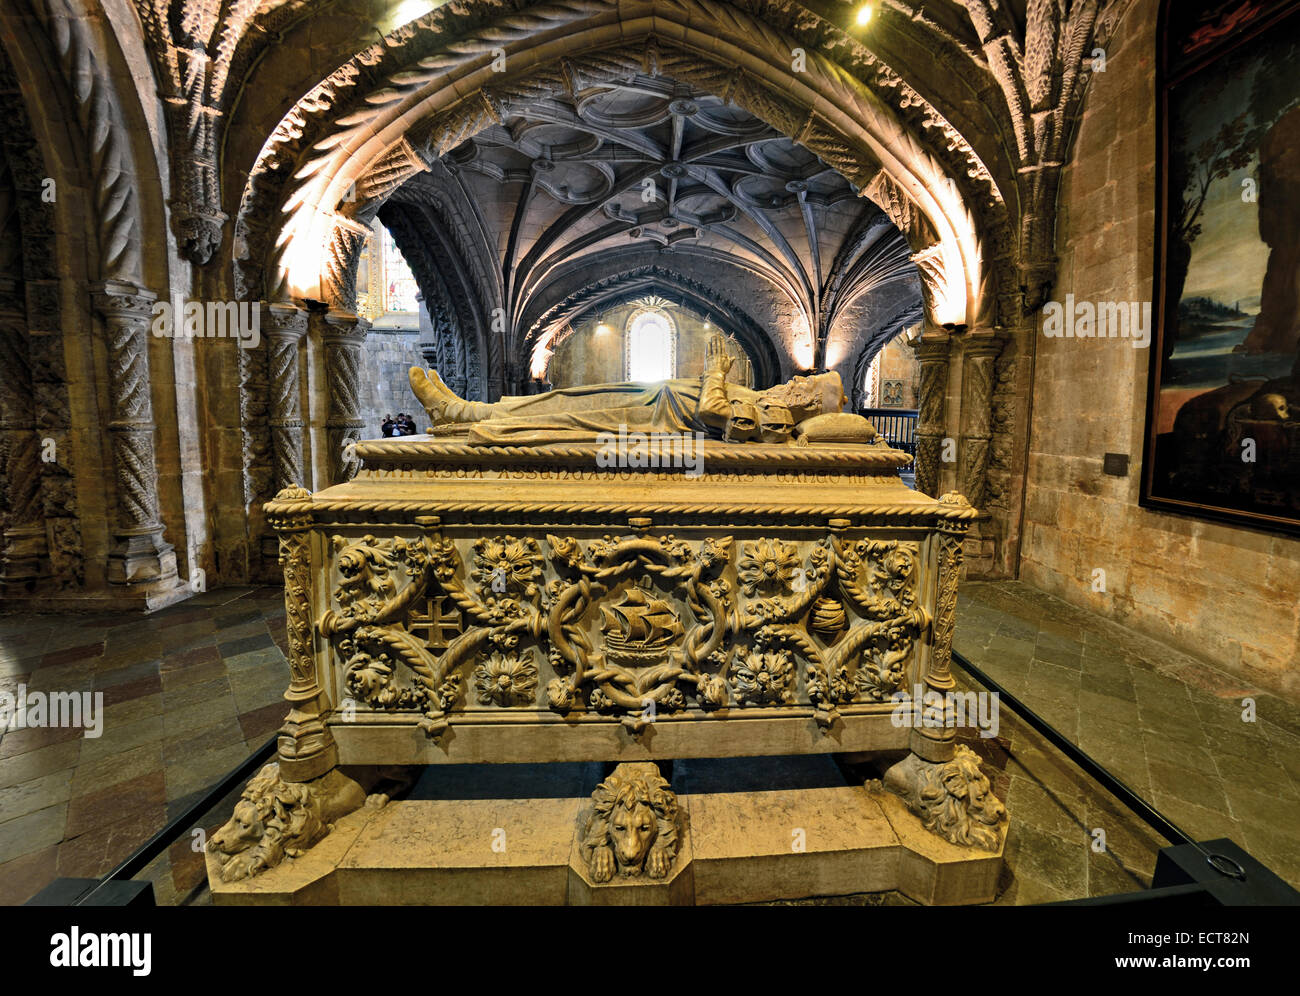 Portugal, Lisbon: Tomb of Vasco da Gama inside of the monastery church Santa Maria in the Monastery of Jeronimos in Belém Stock Photo